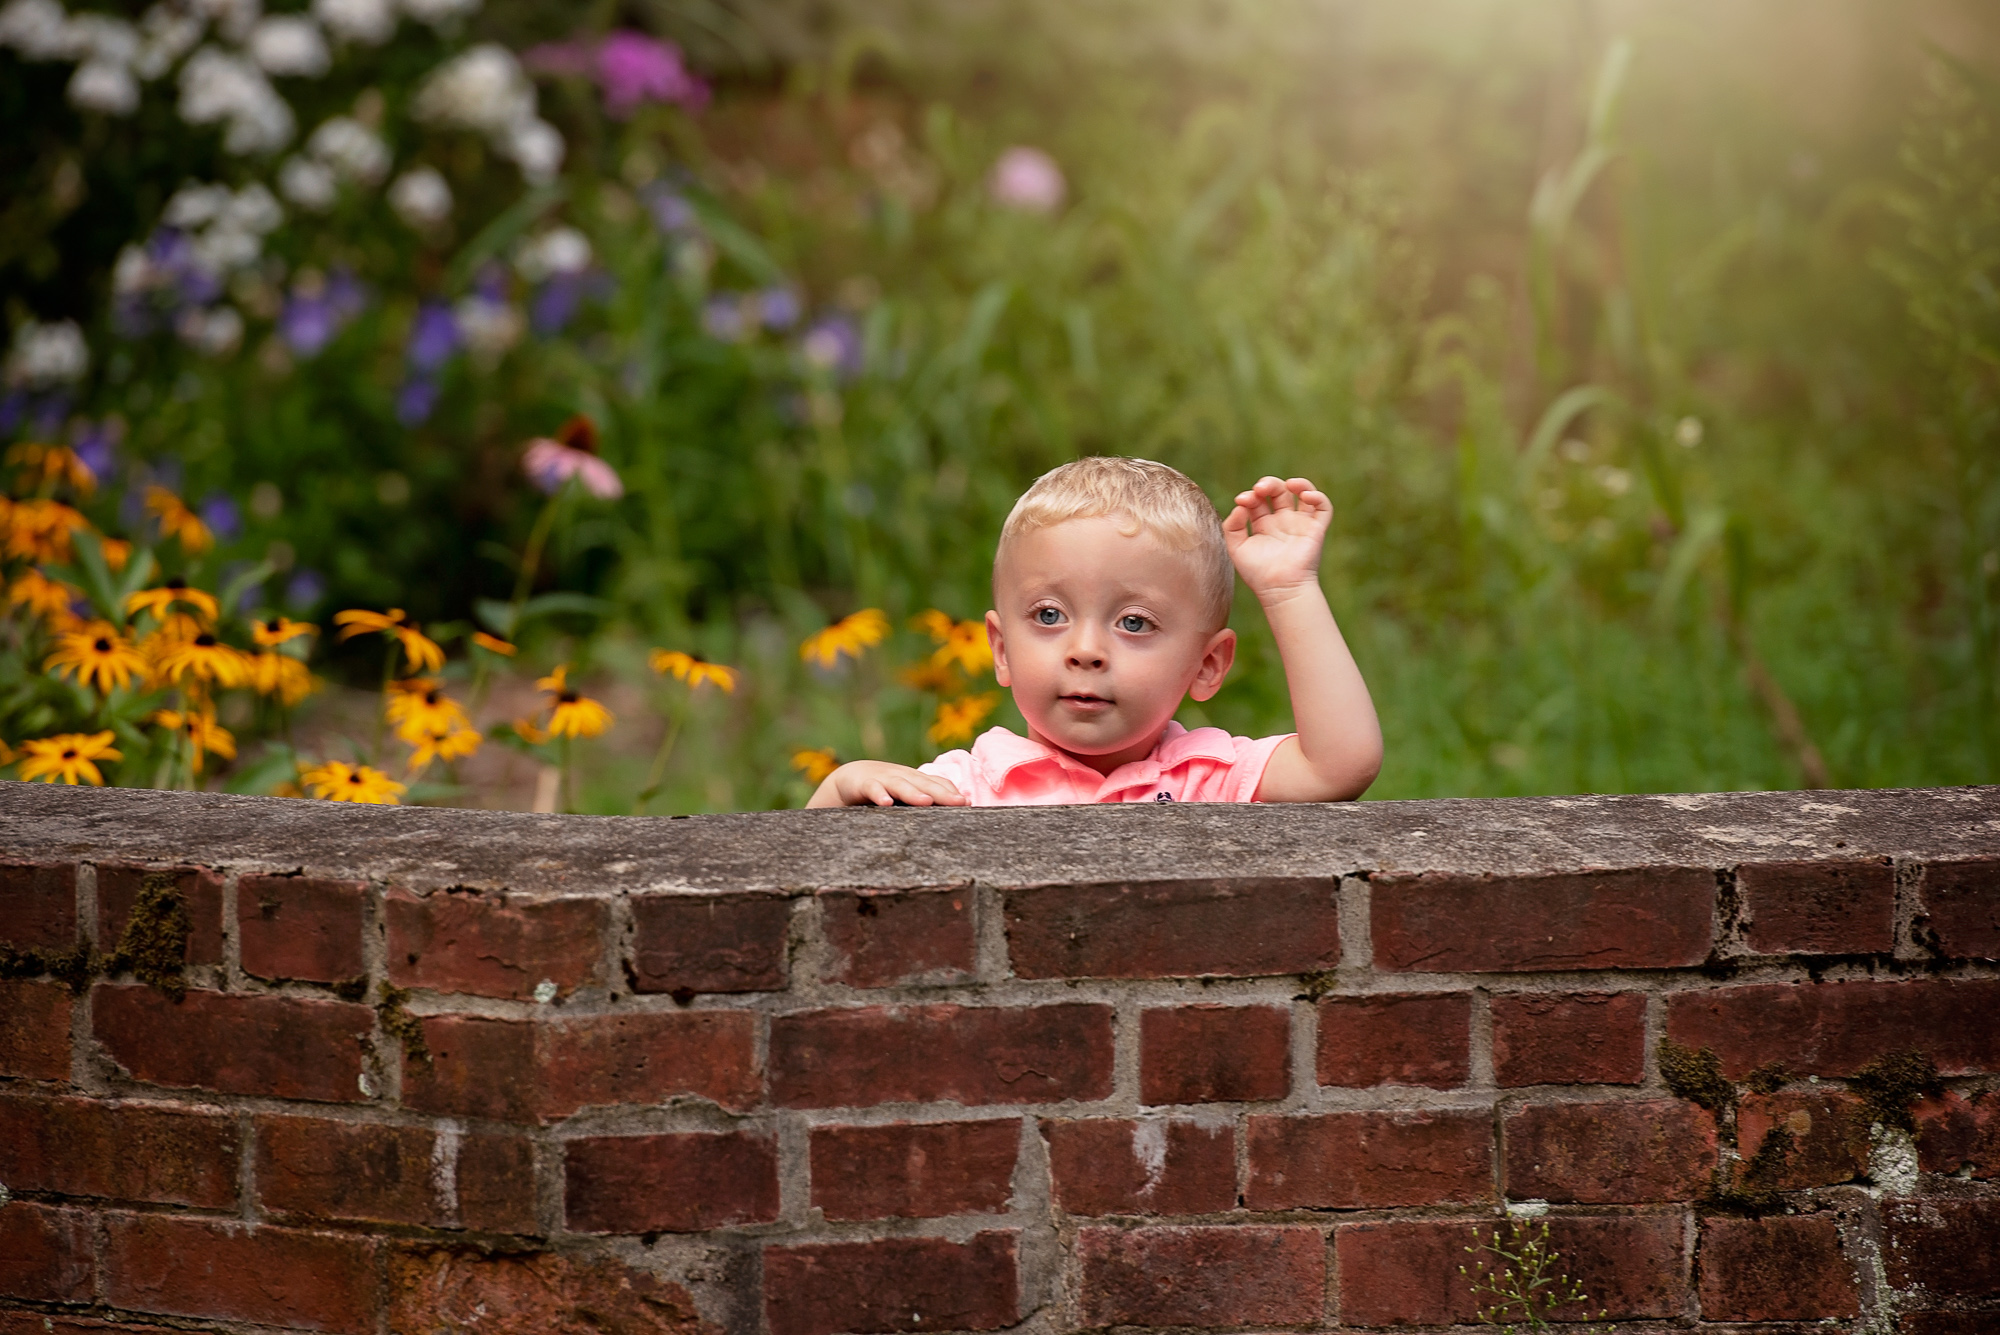 Toddler behind a brick garden wall